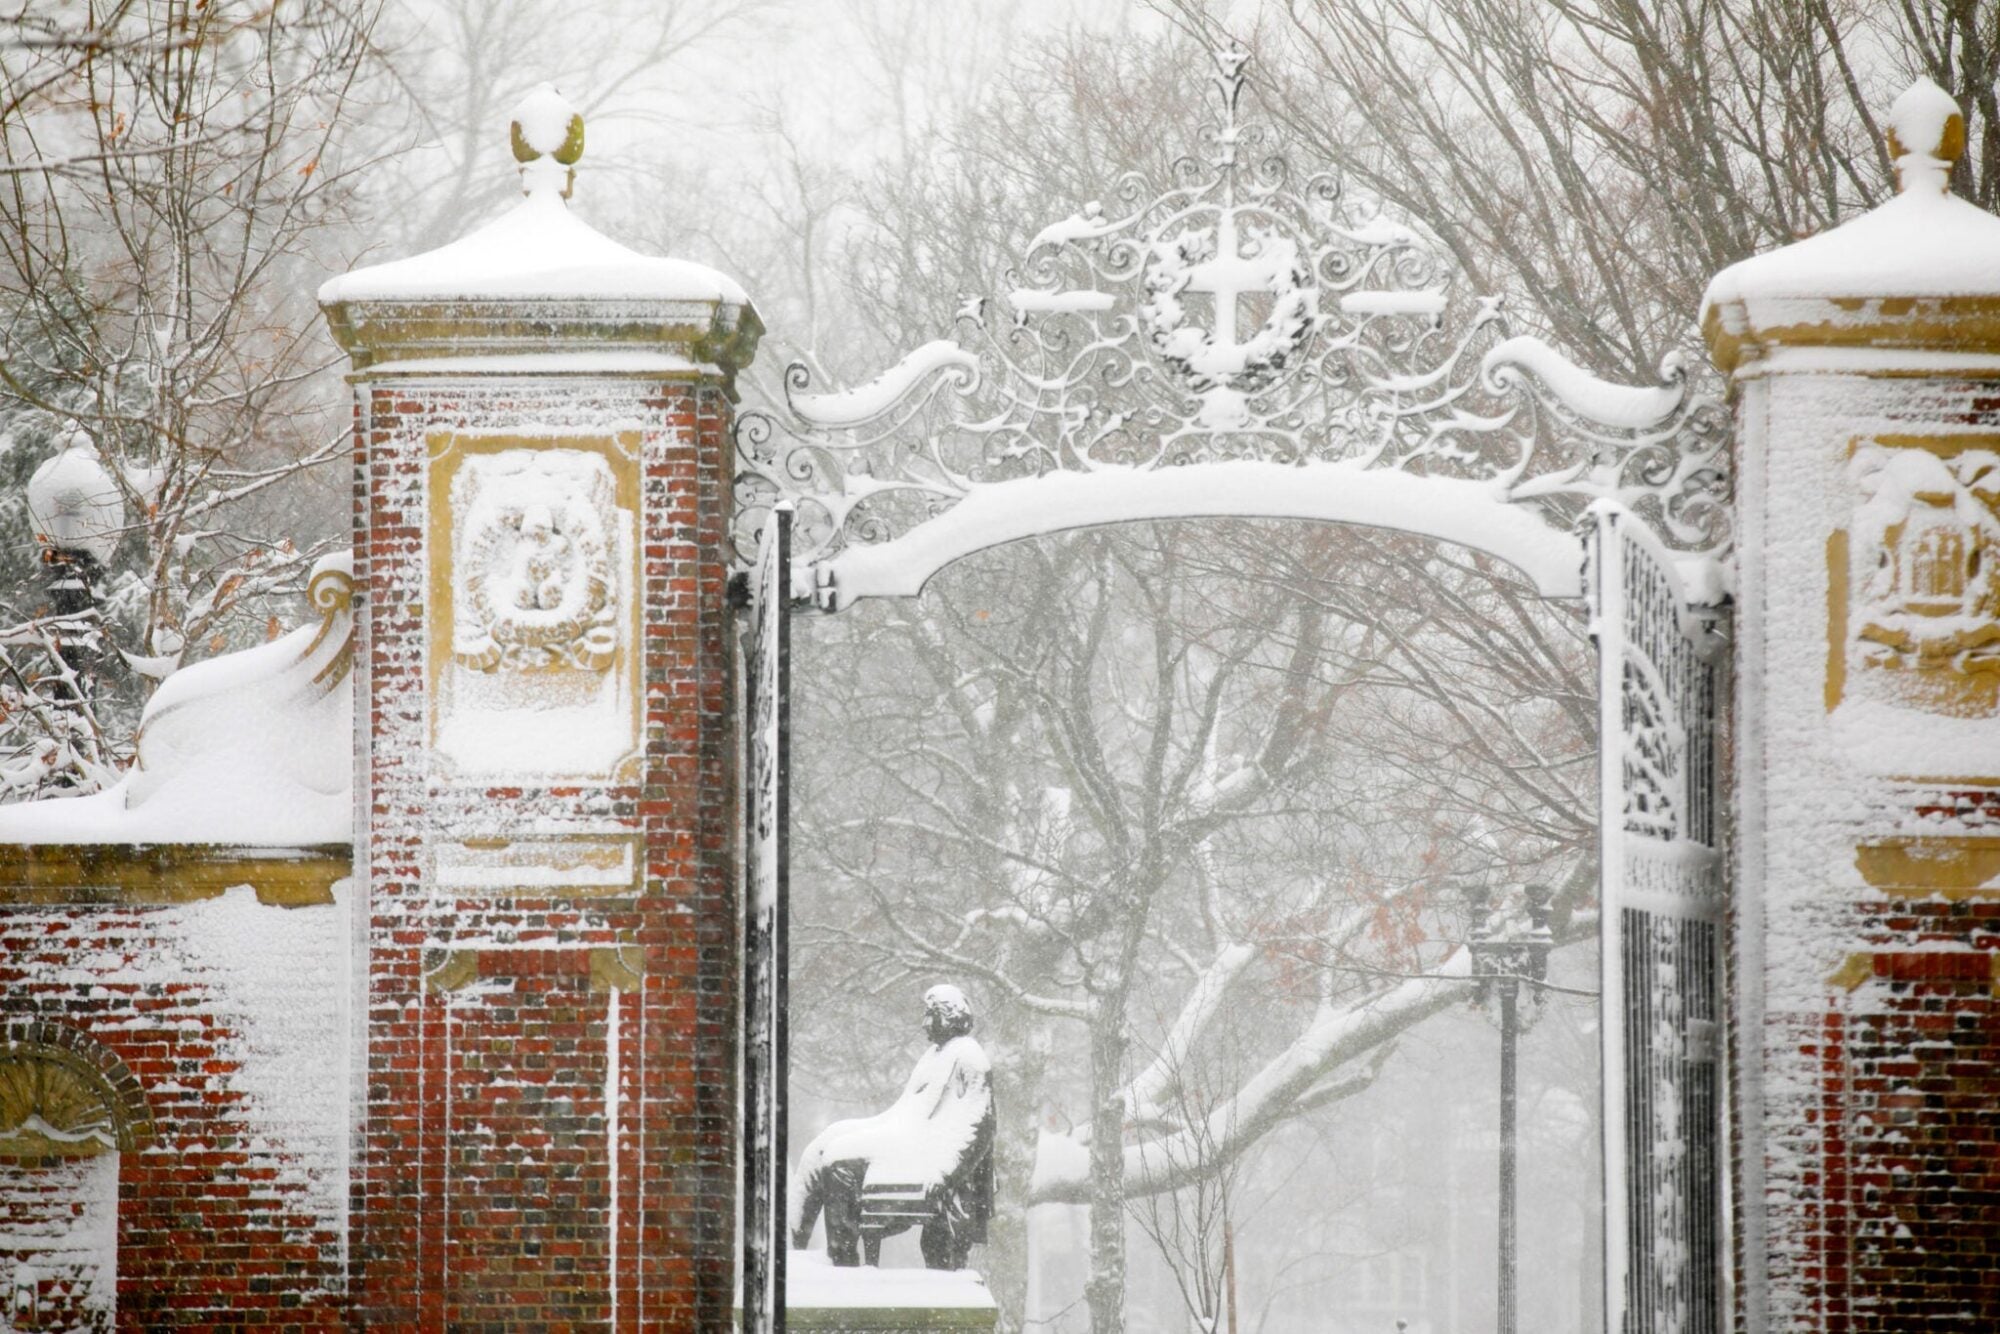 Snow falling around a Harvard Yard gate